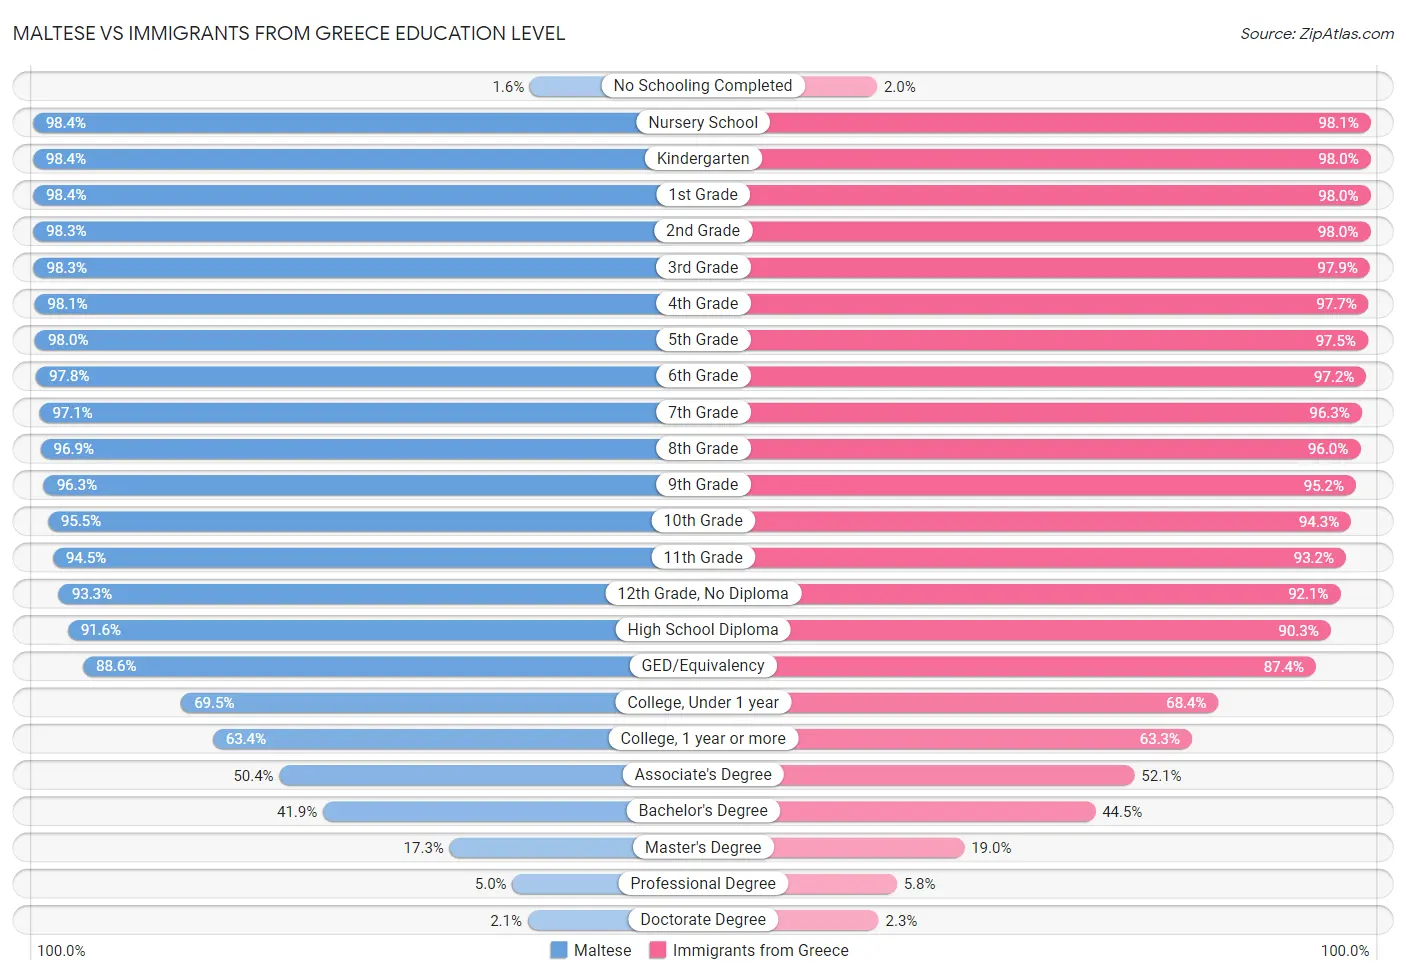 Maltese vs Immigrants from Greece Education Level